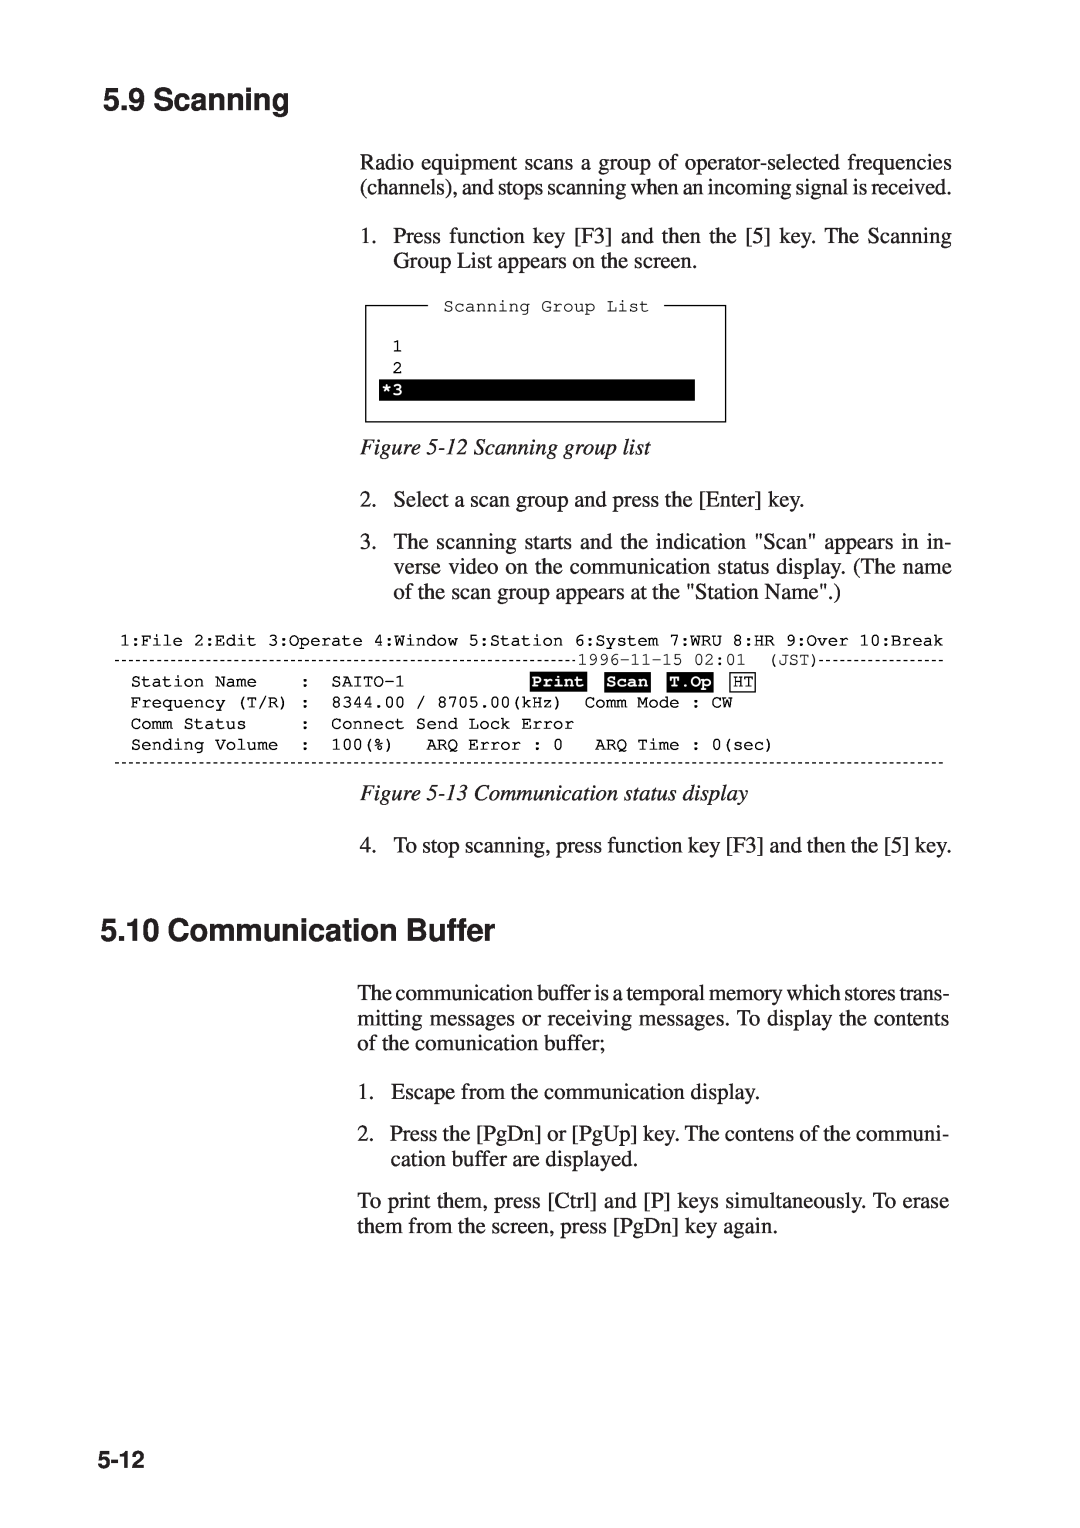 Furuno RC-1500-1T manual Communication Buffer, 12 Scanning group list, 13 Communication status display, 5-12 